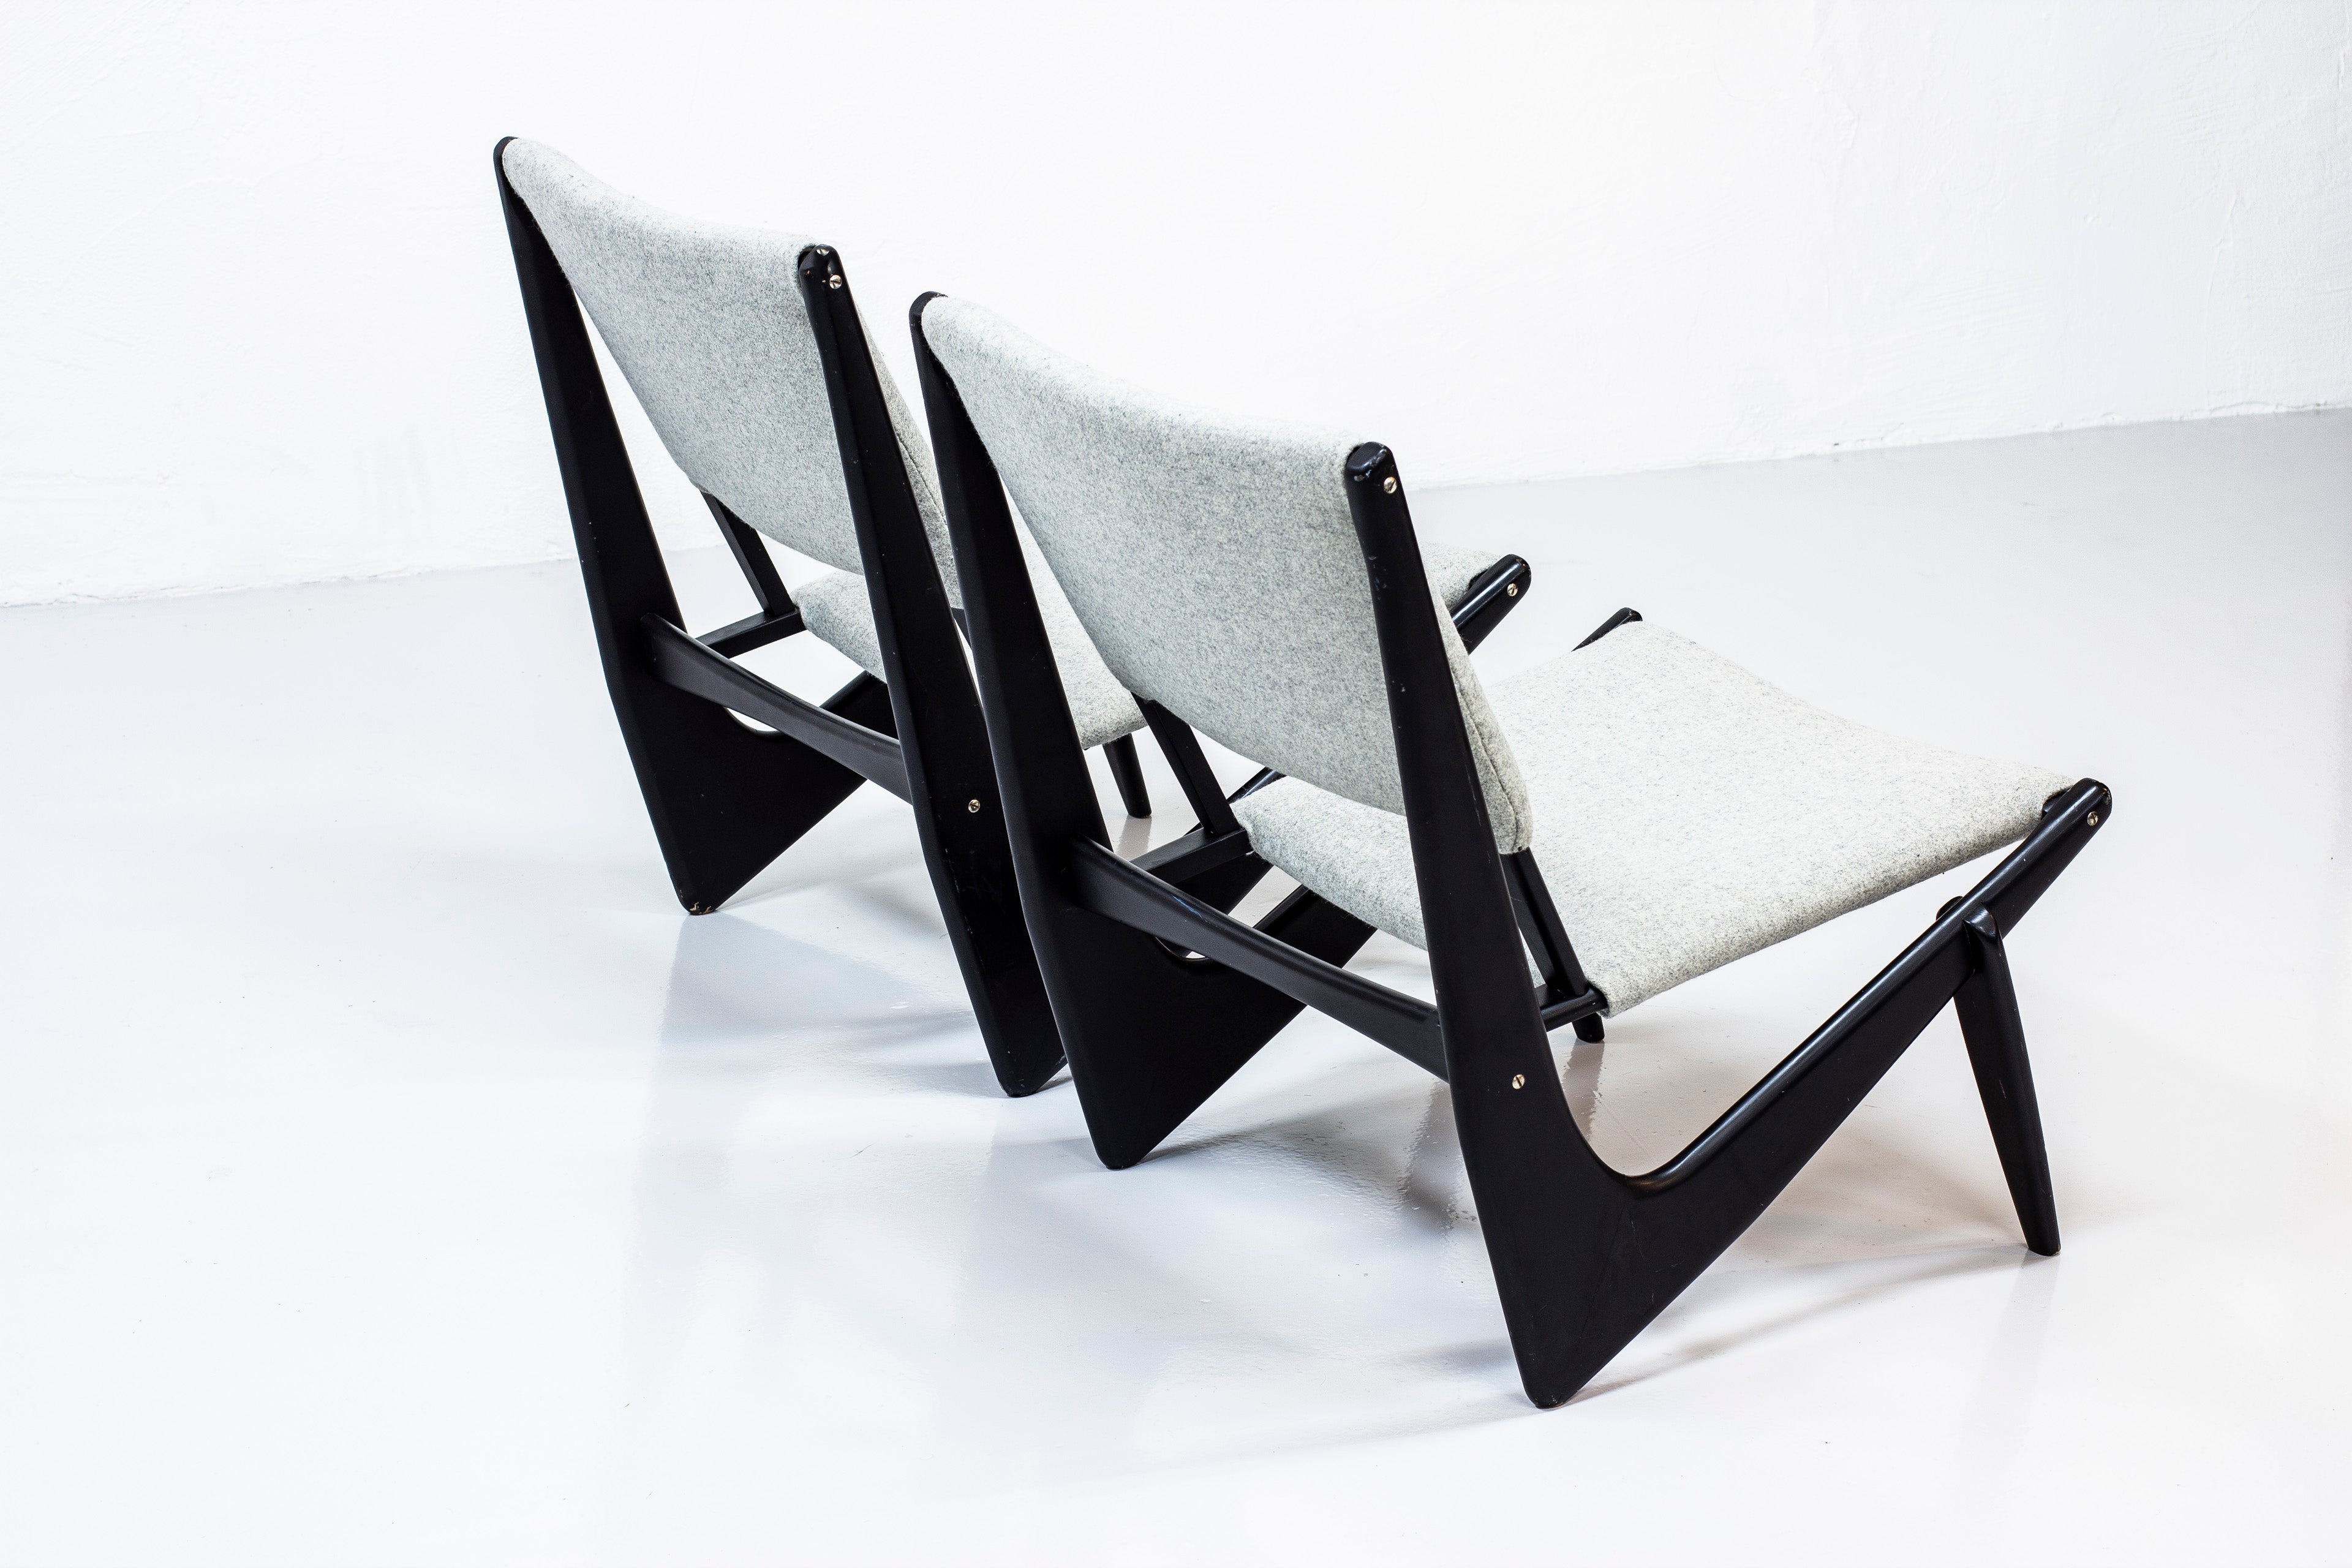 Lounge chairs by Bertil Behrman